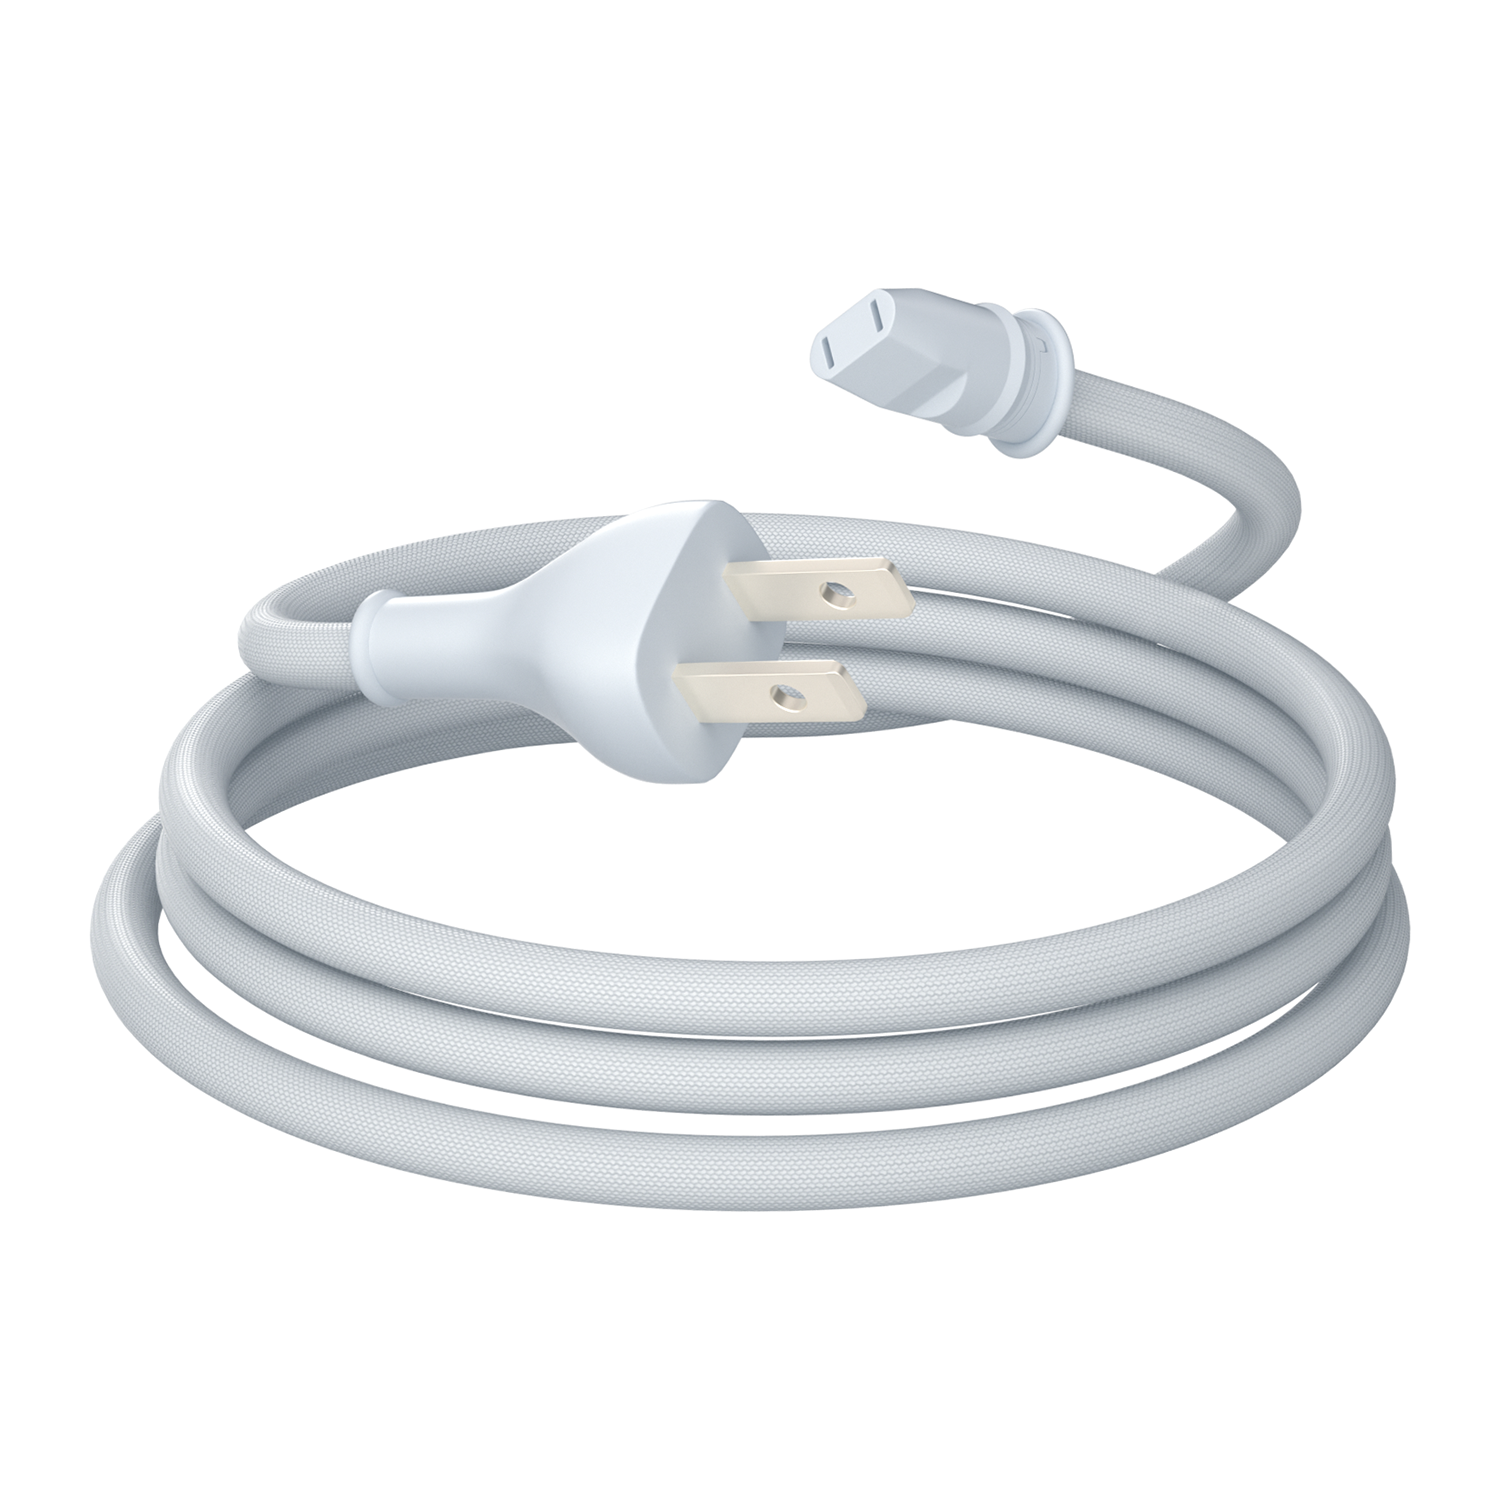 Genuine Apple A1639 HomePod Smart Speaker Power Cable Cord 6FT 622-00147 White Brand: Apple Model: 622-00147 Type: